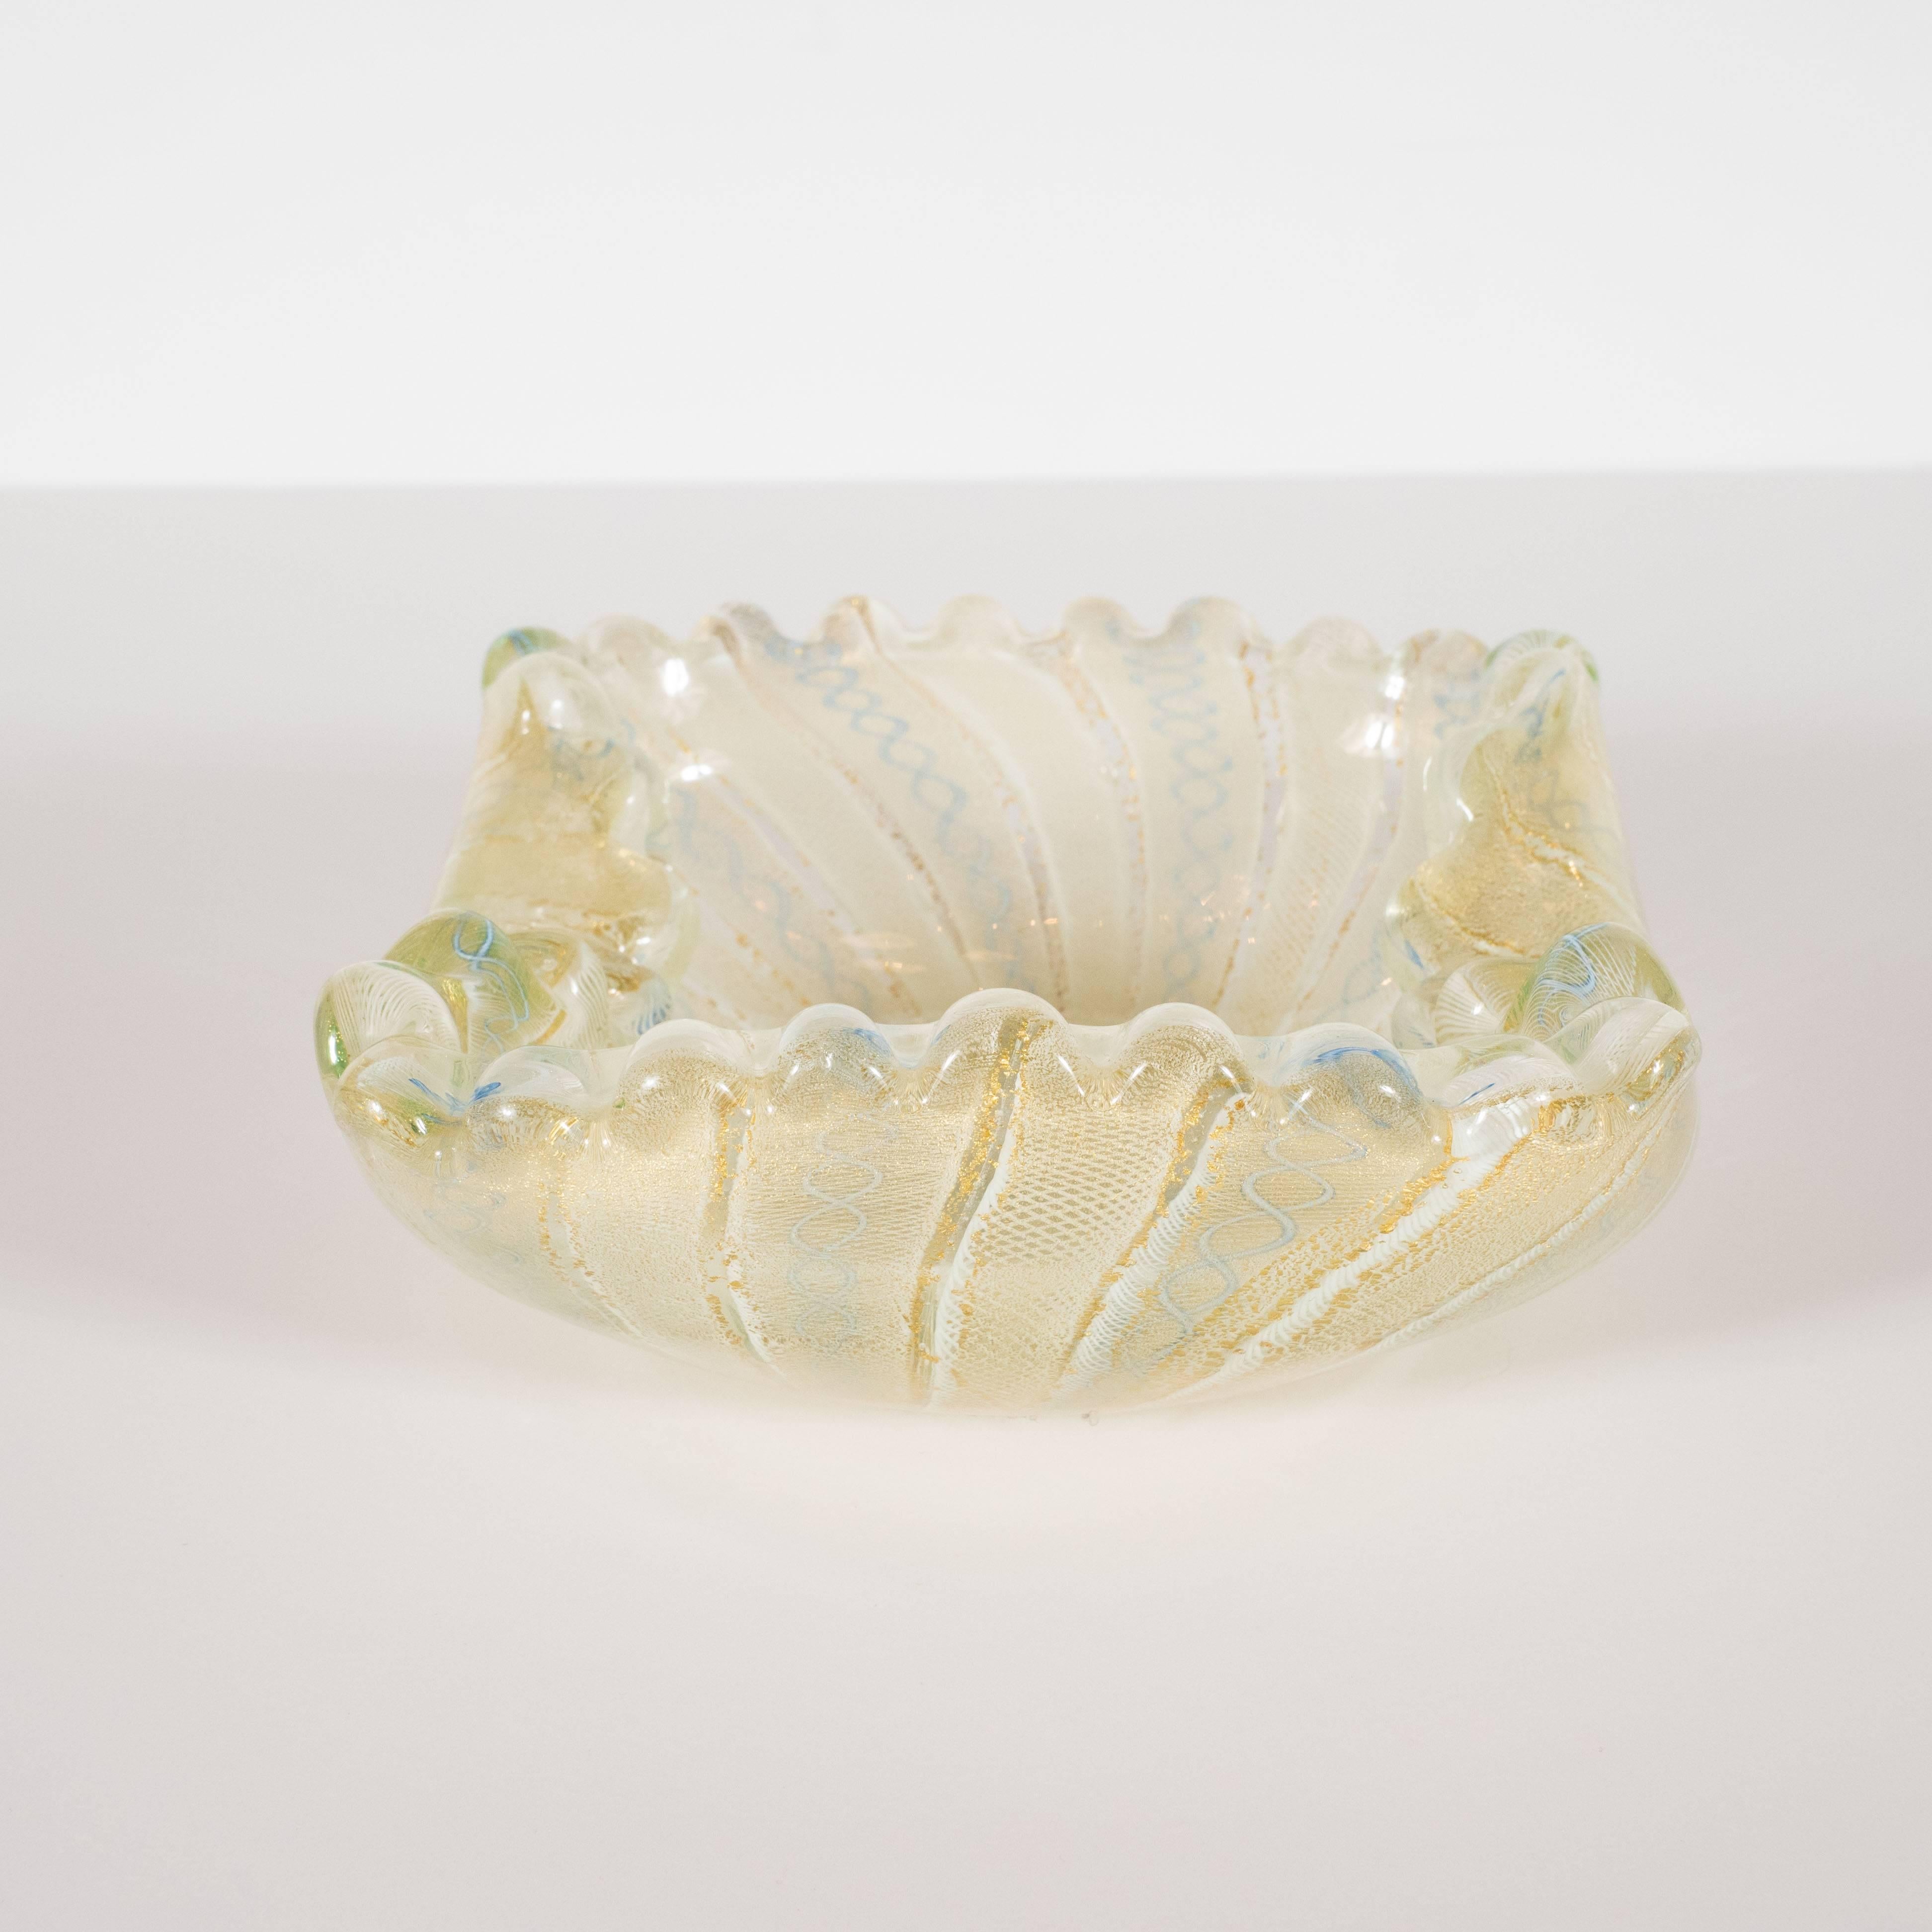 Italian Mid-Century Modern Murano Filigrana Decorative Bowl with 24-Karat Gold Flecks